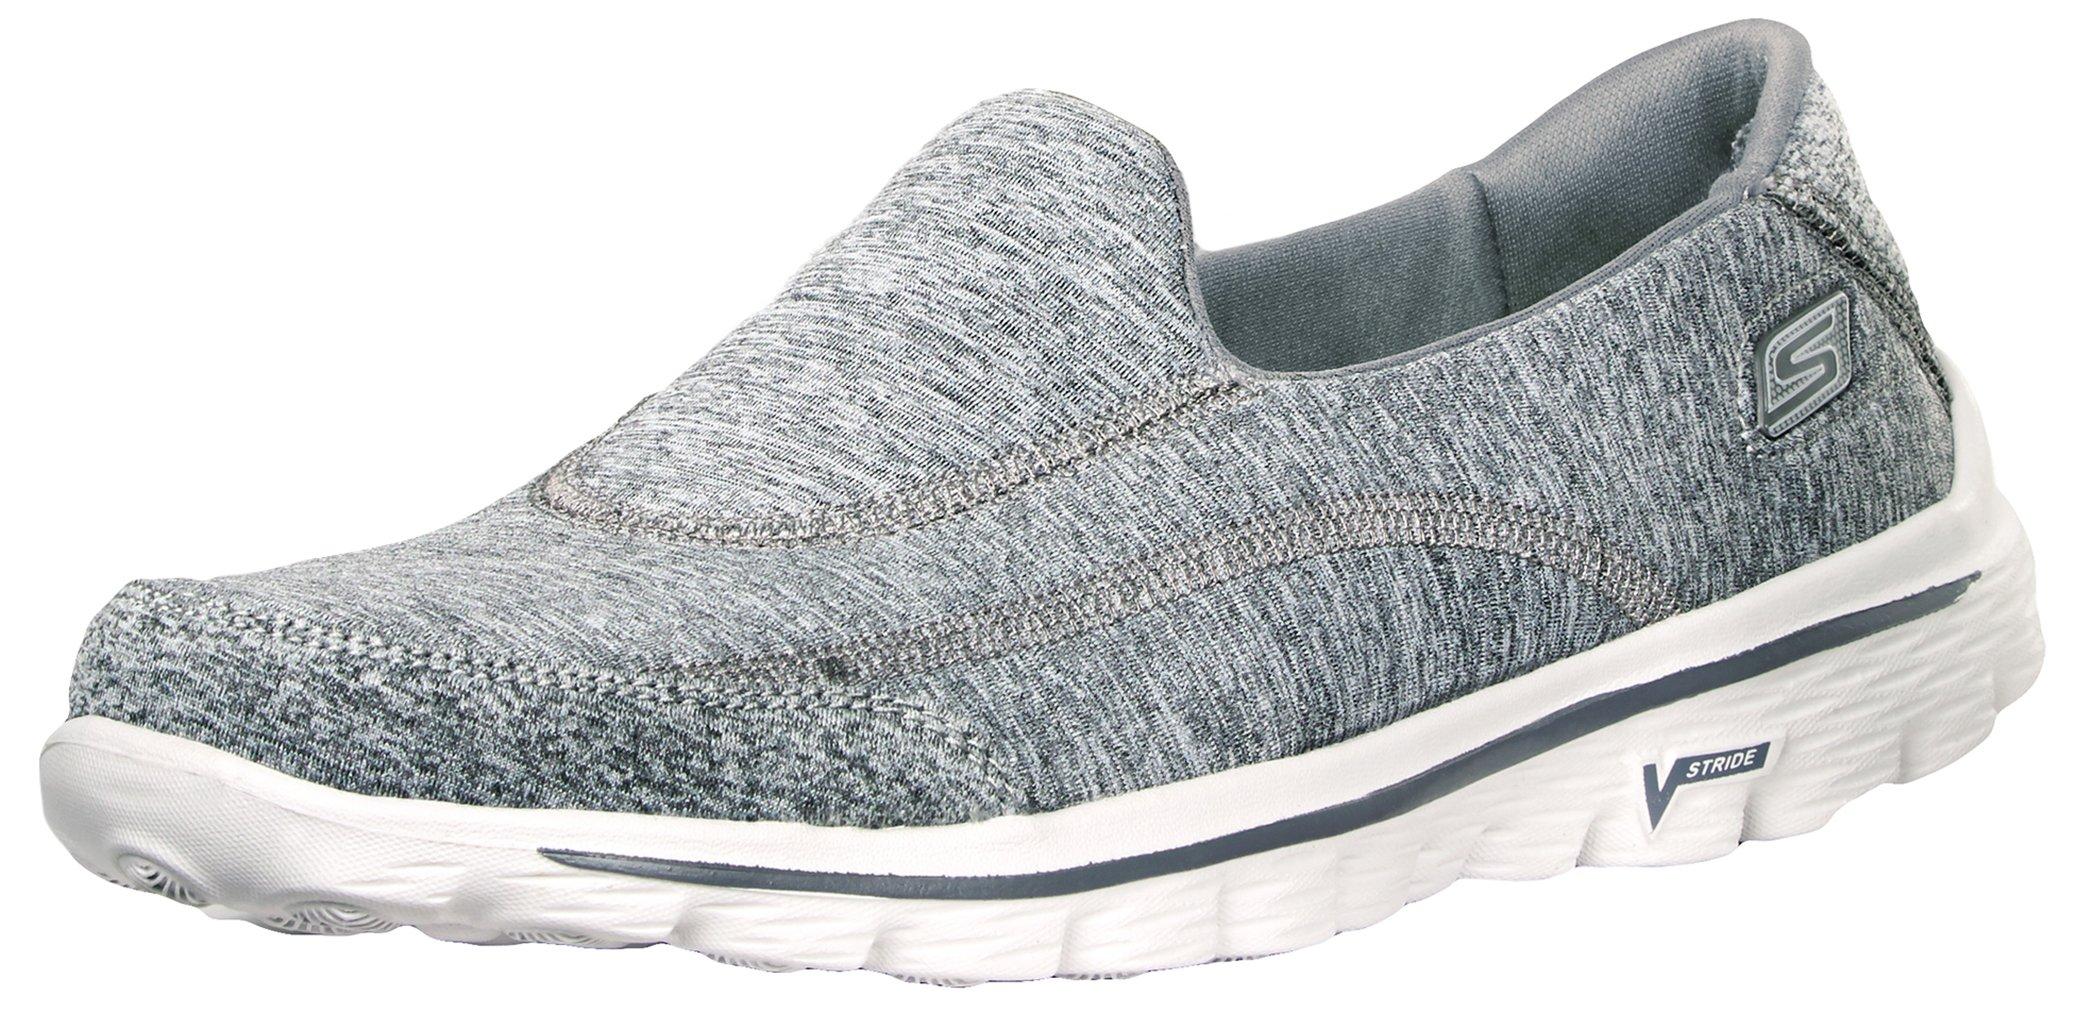 Skechers Synthetic Performance Go Walk 2 Slip-on Walking Shoe in Heather  Grey (Gray) - Save 49% | Lyst